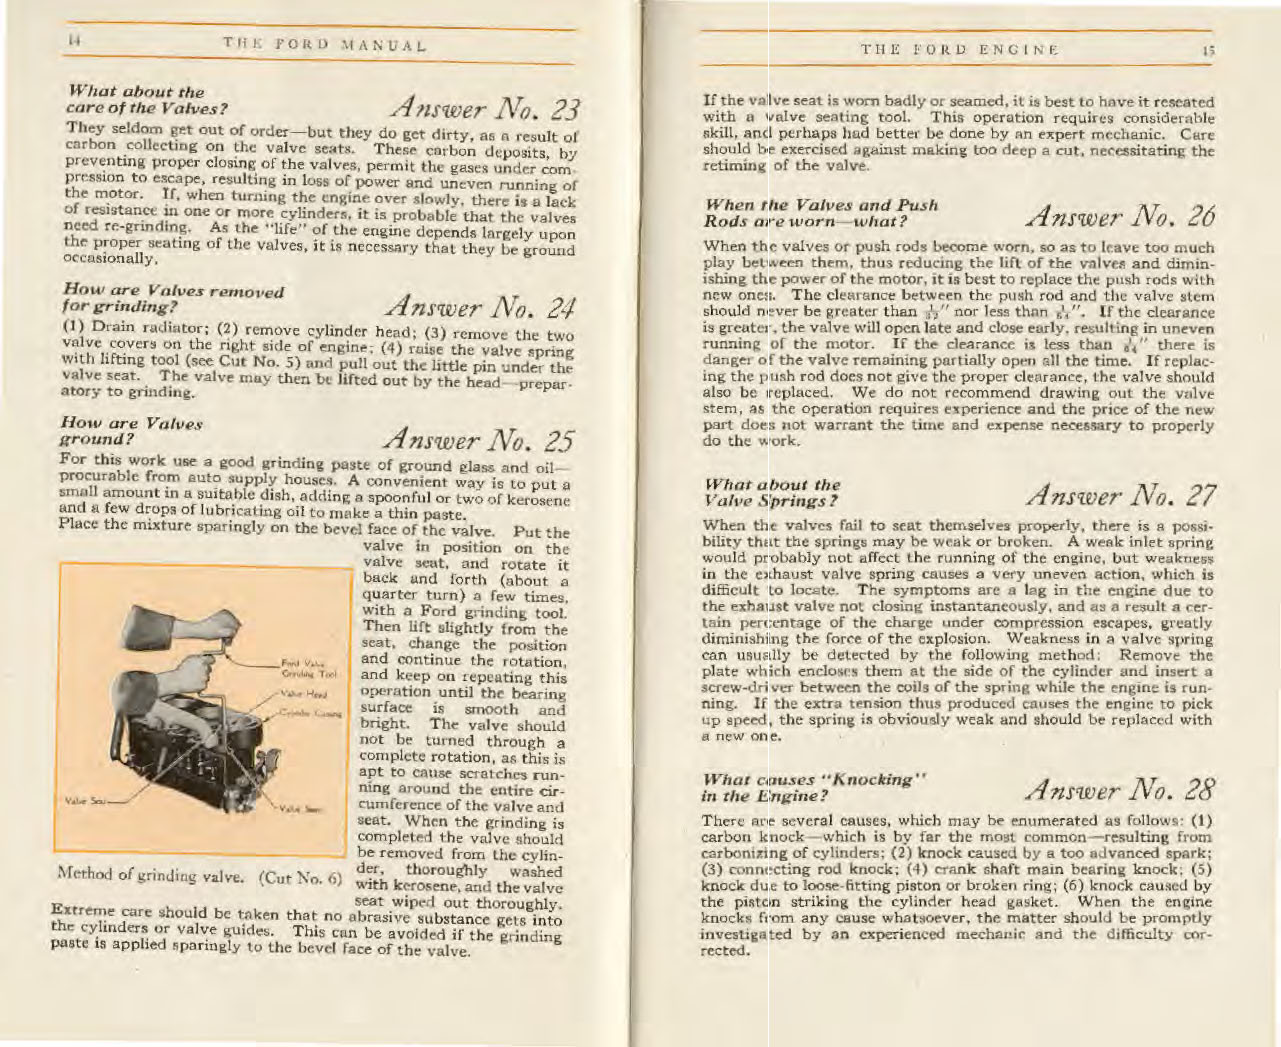 n_1919 Ford Manual-14-15.jpg